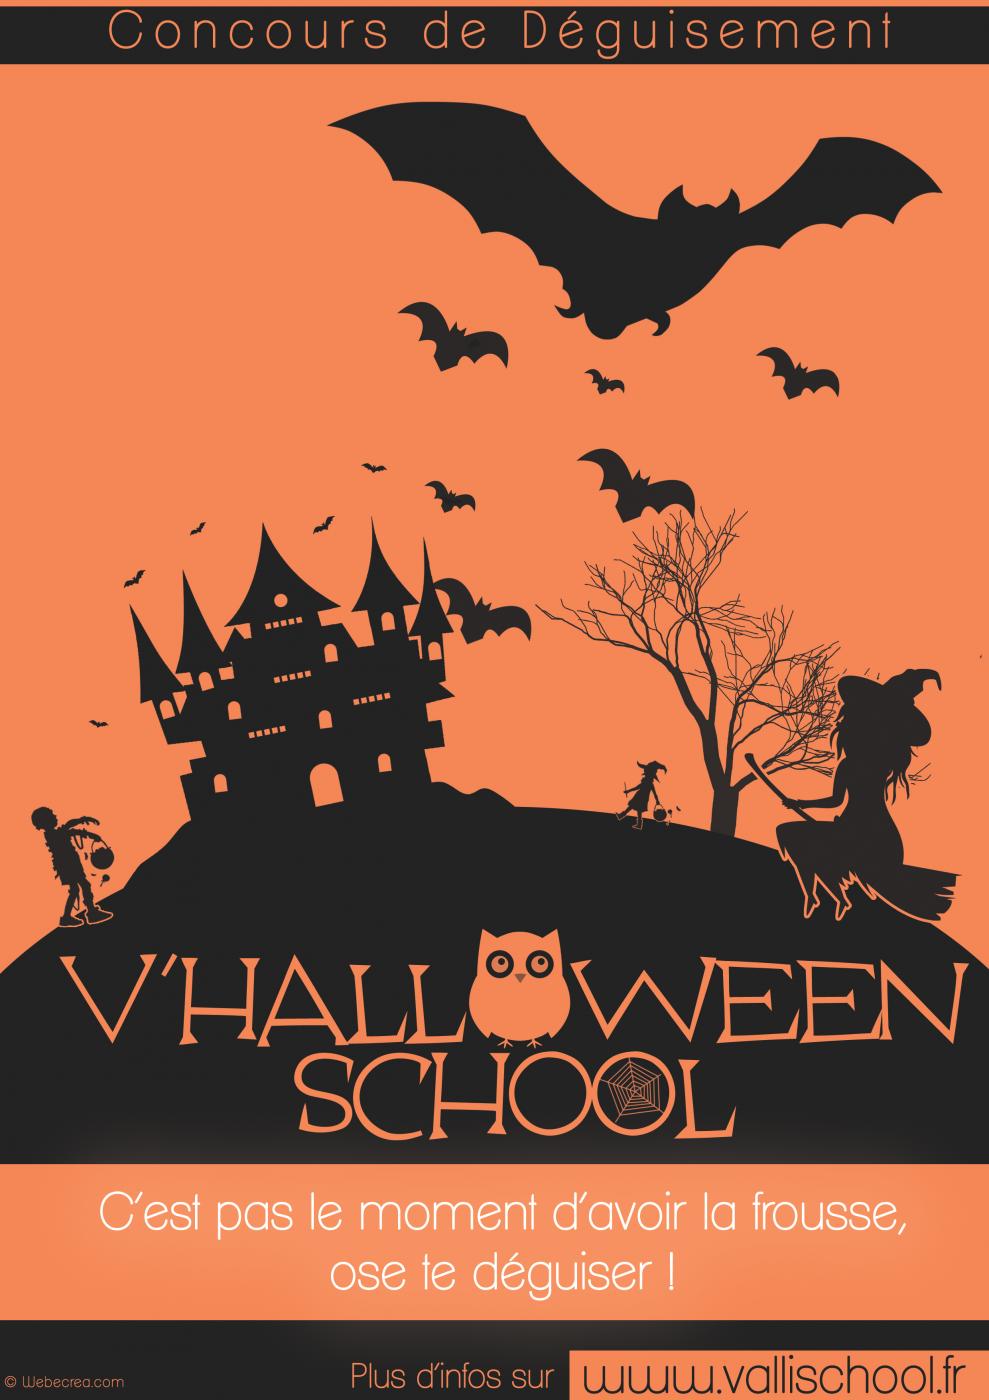 Affiche Vhalloween School.jpg